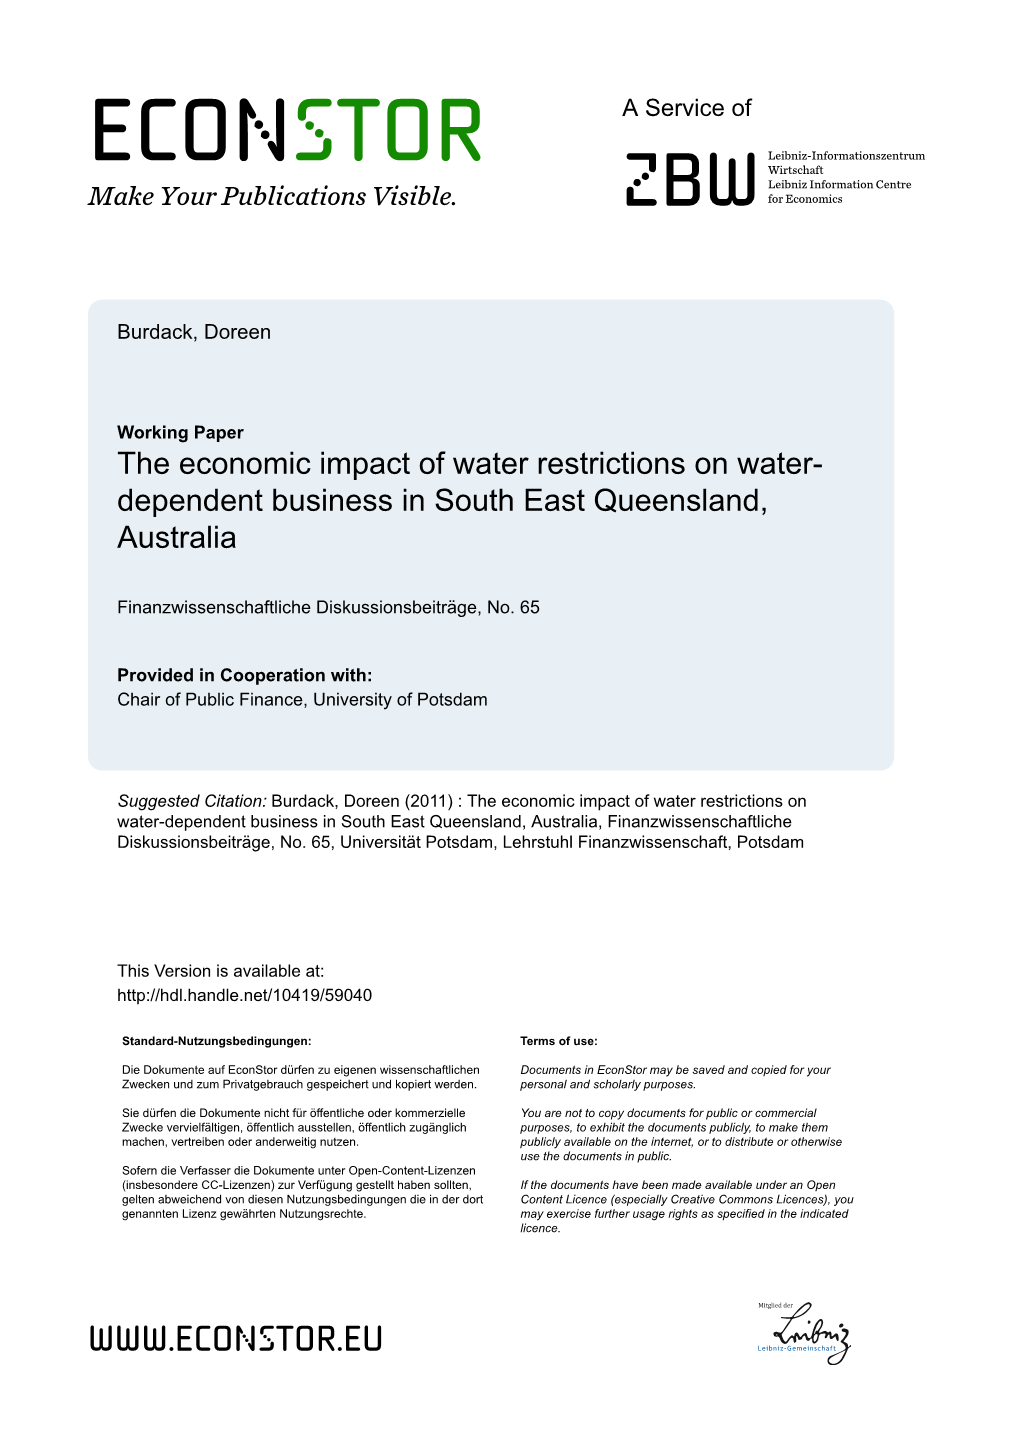 The Economic Impact of Water Restrictions on Water-Dependent Business in South East Queensland, Australia, Finanzwissenschaftliche Diskussionsbeiträge, No